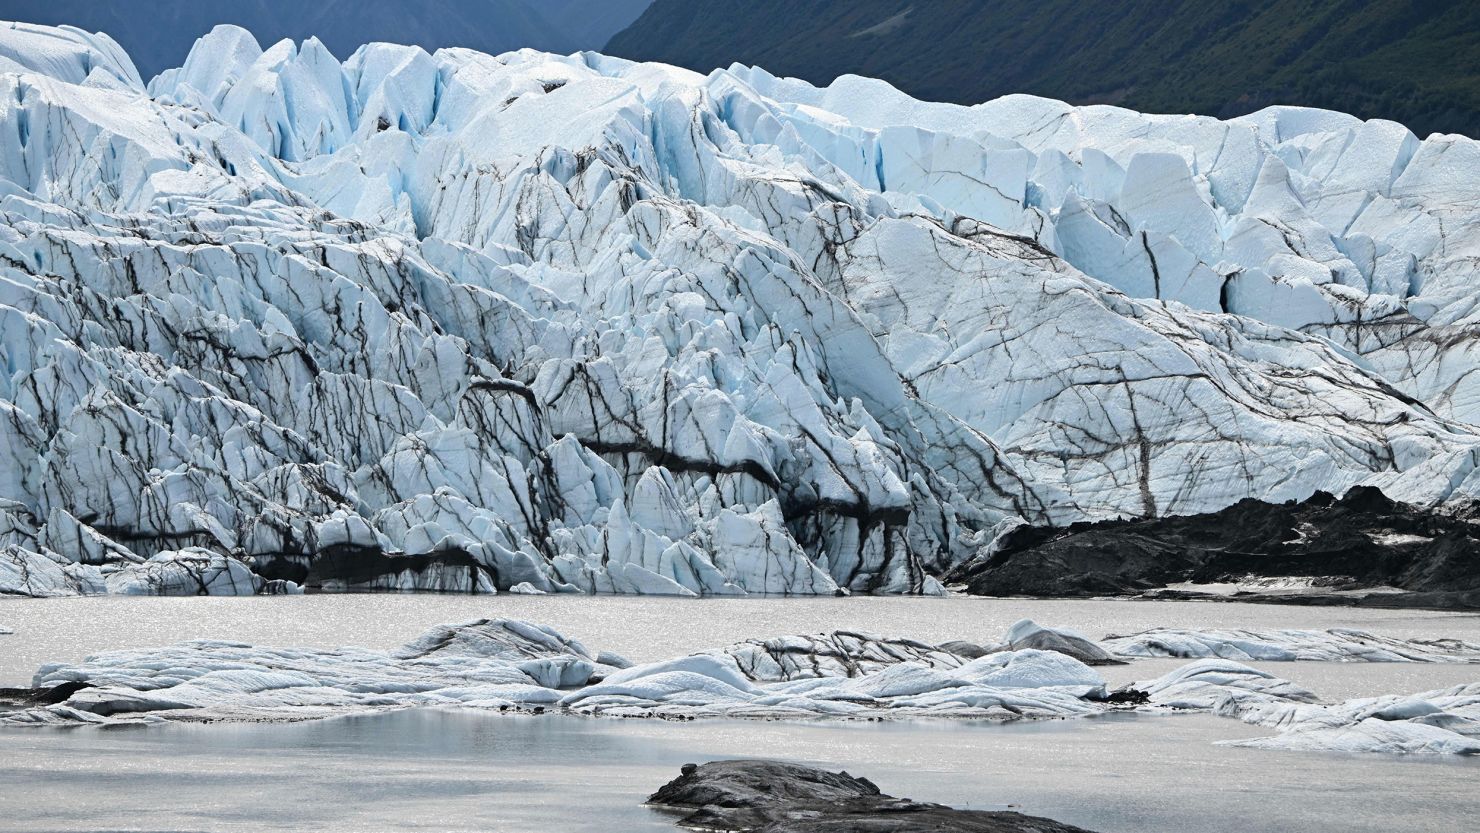 The Matanuska Glacier, 100 miles northeast of Anchorage near Palmer, Alaska. Like many Alaskan glaciers, it is shrinking.